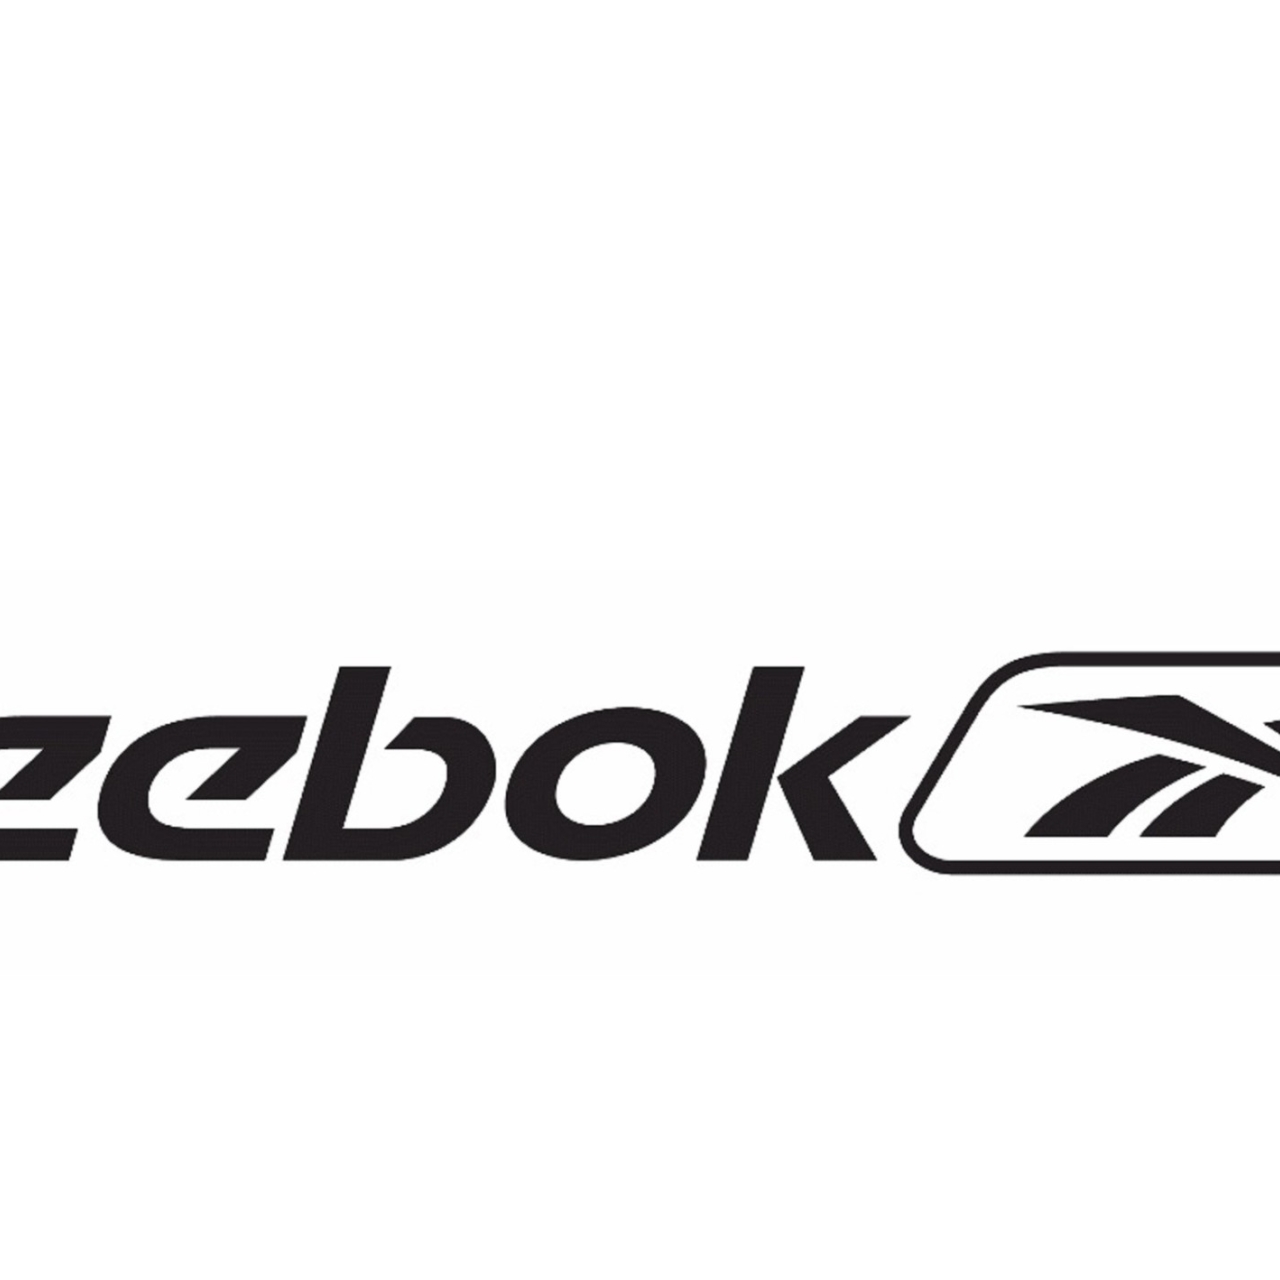 1280x1280 reebok, logo, sport 1280x1280 Resolution Wallpaper, HD Brands ...